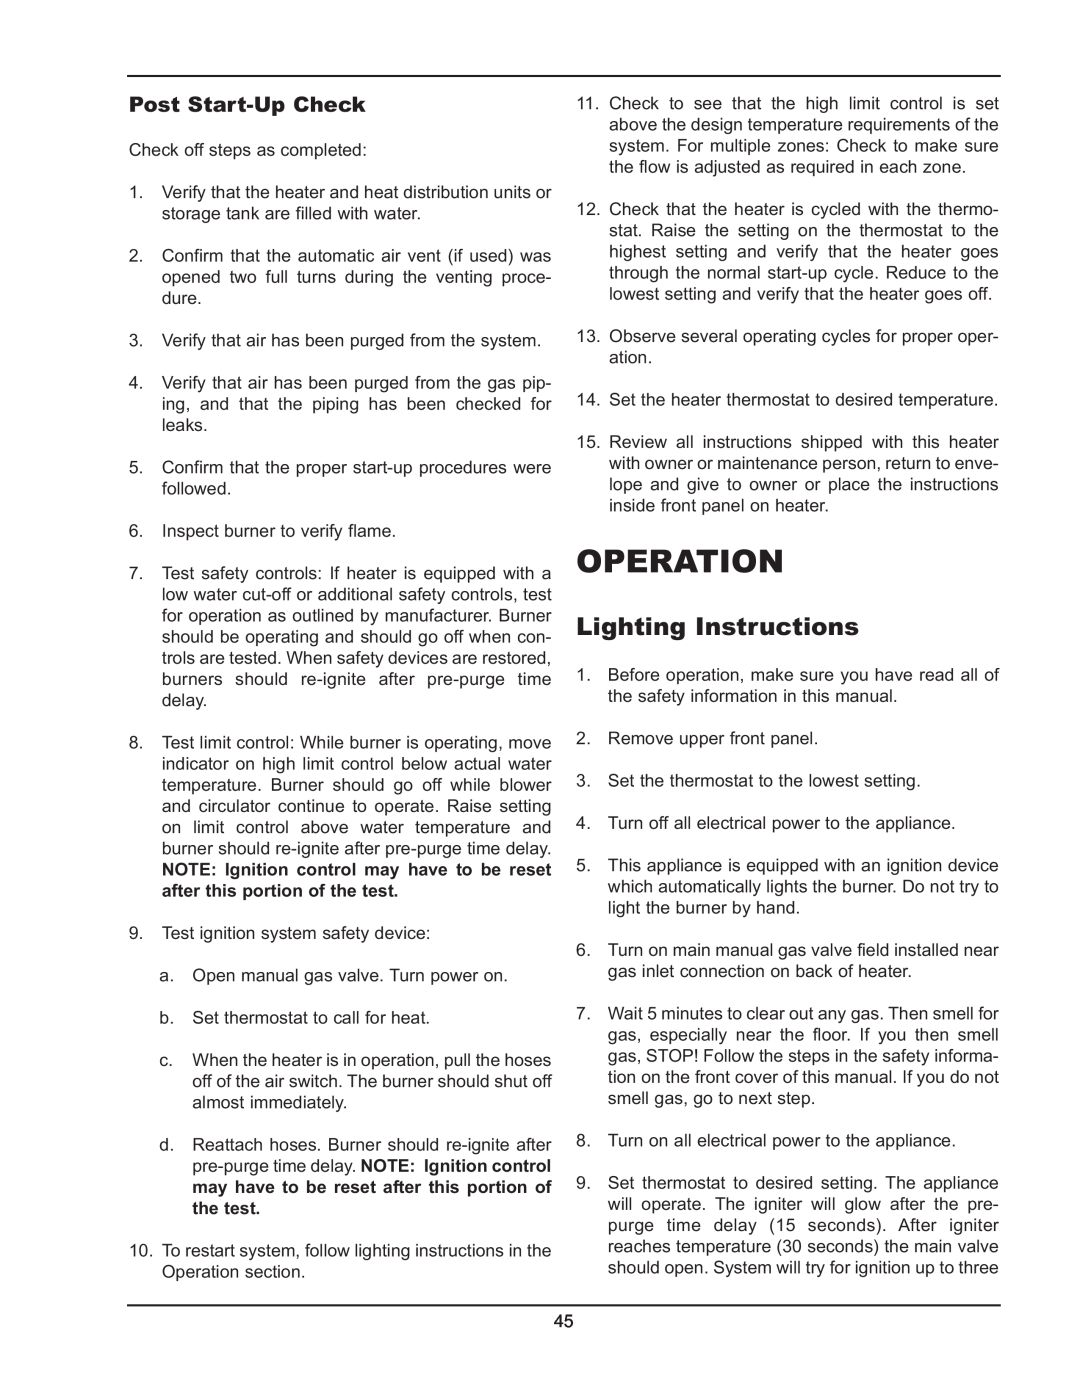 Raypak 503-2003 manual Operation, Lighting Instructions 